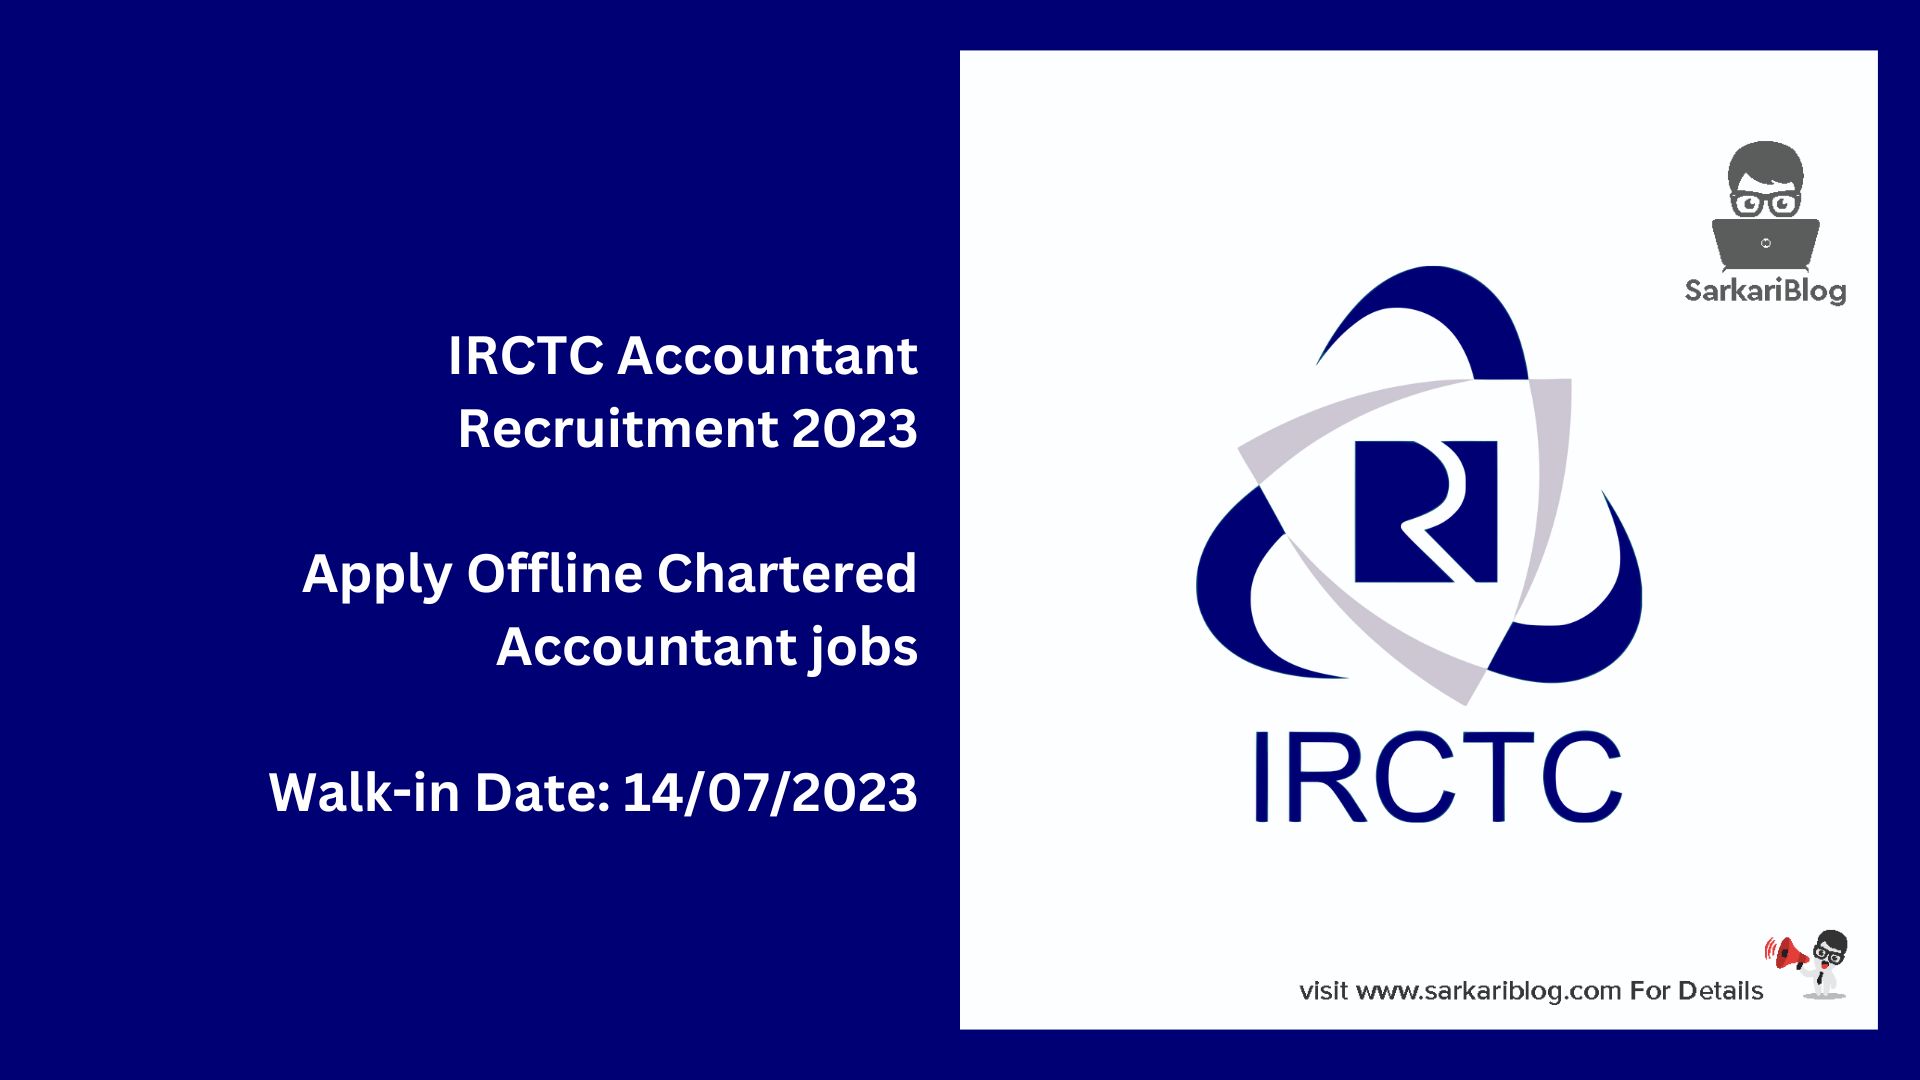 IRCTC Accountant Recruitment 2023